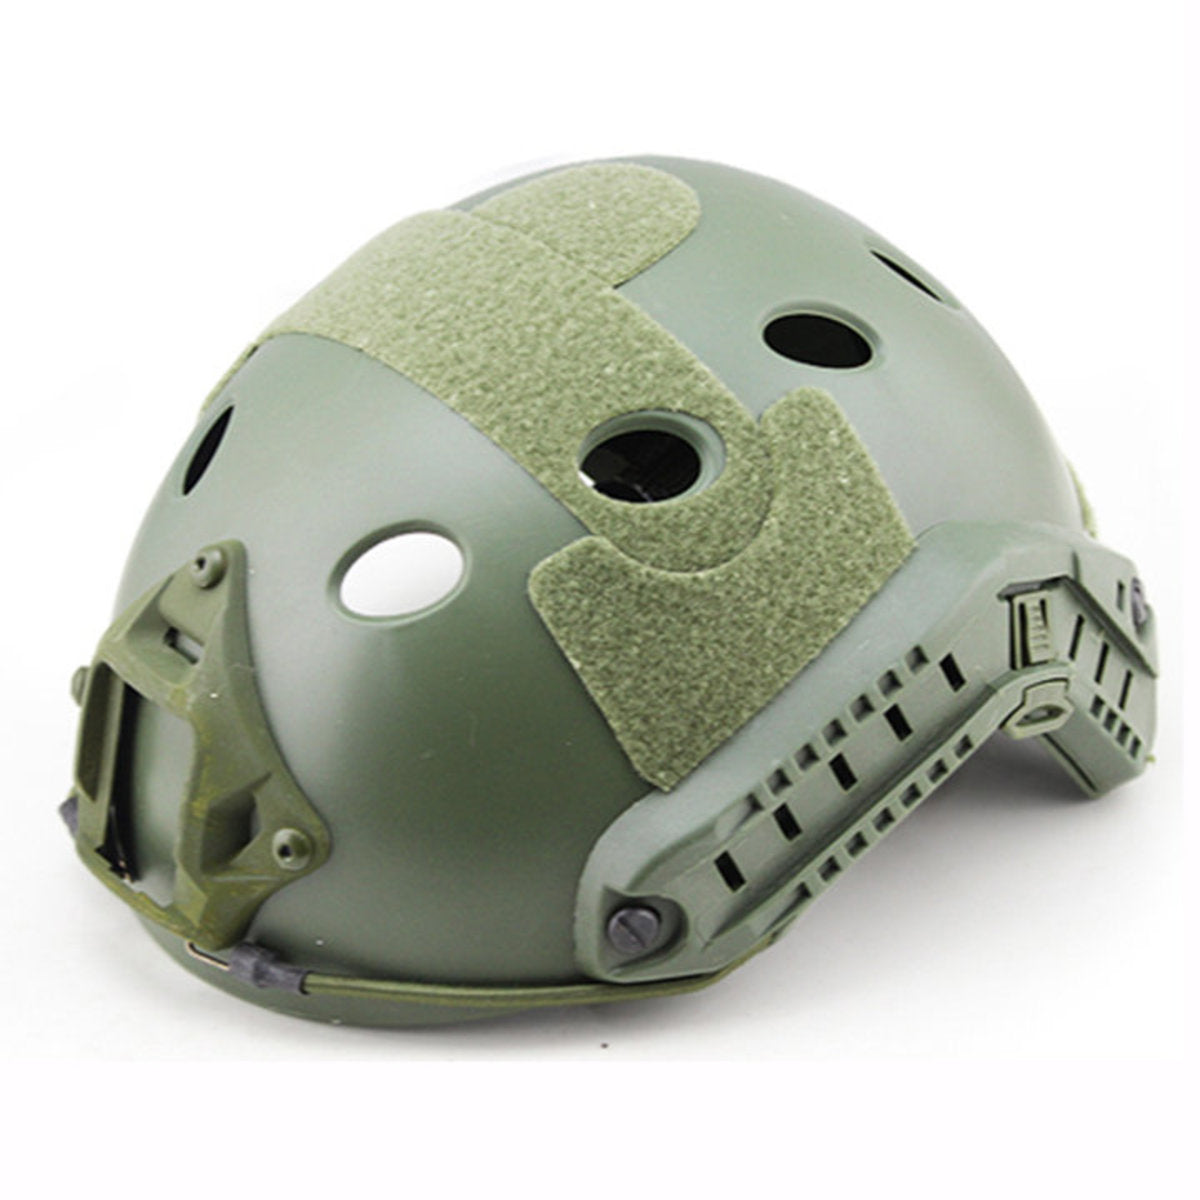 Valken V Tactical Airsoft Helmet ATH Enhanced - Green